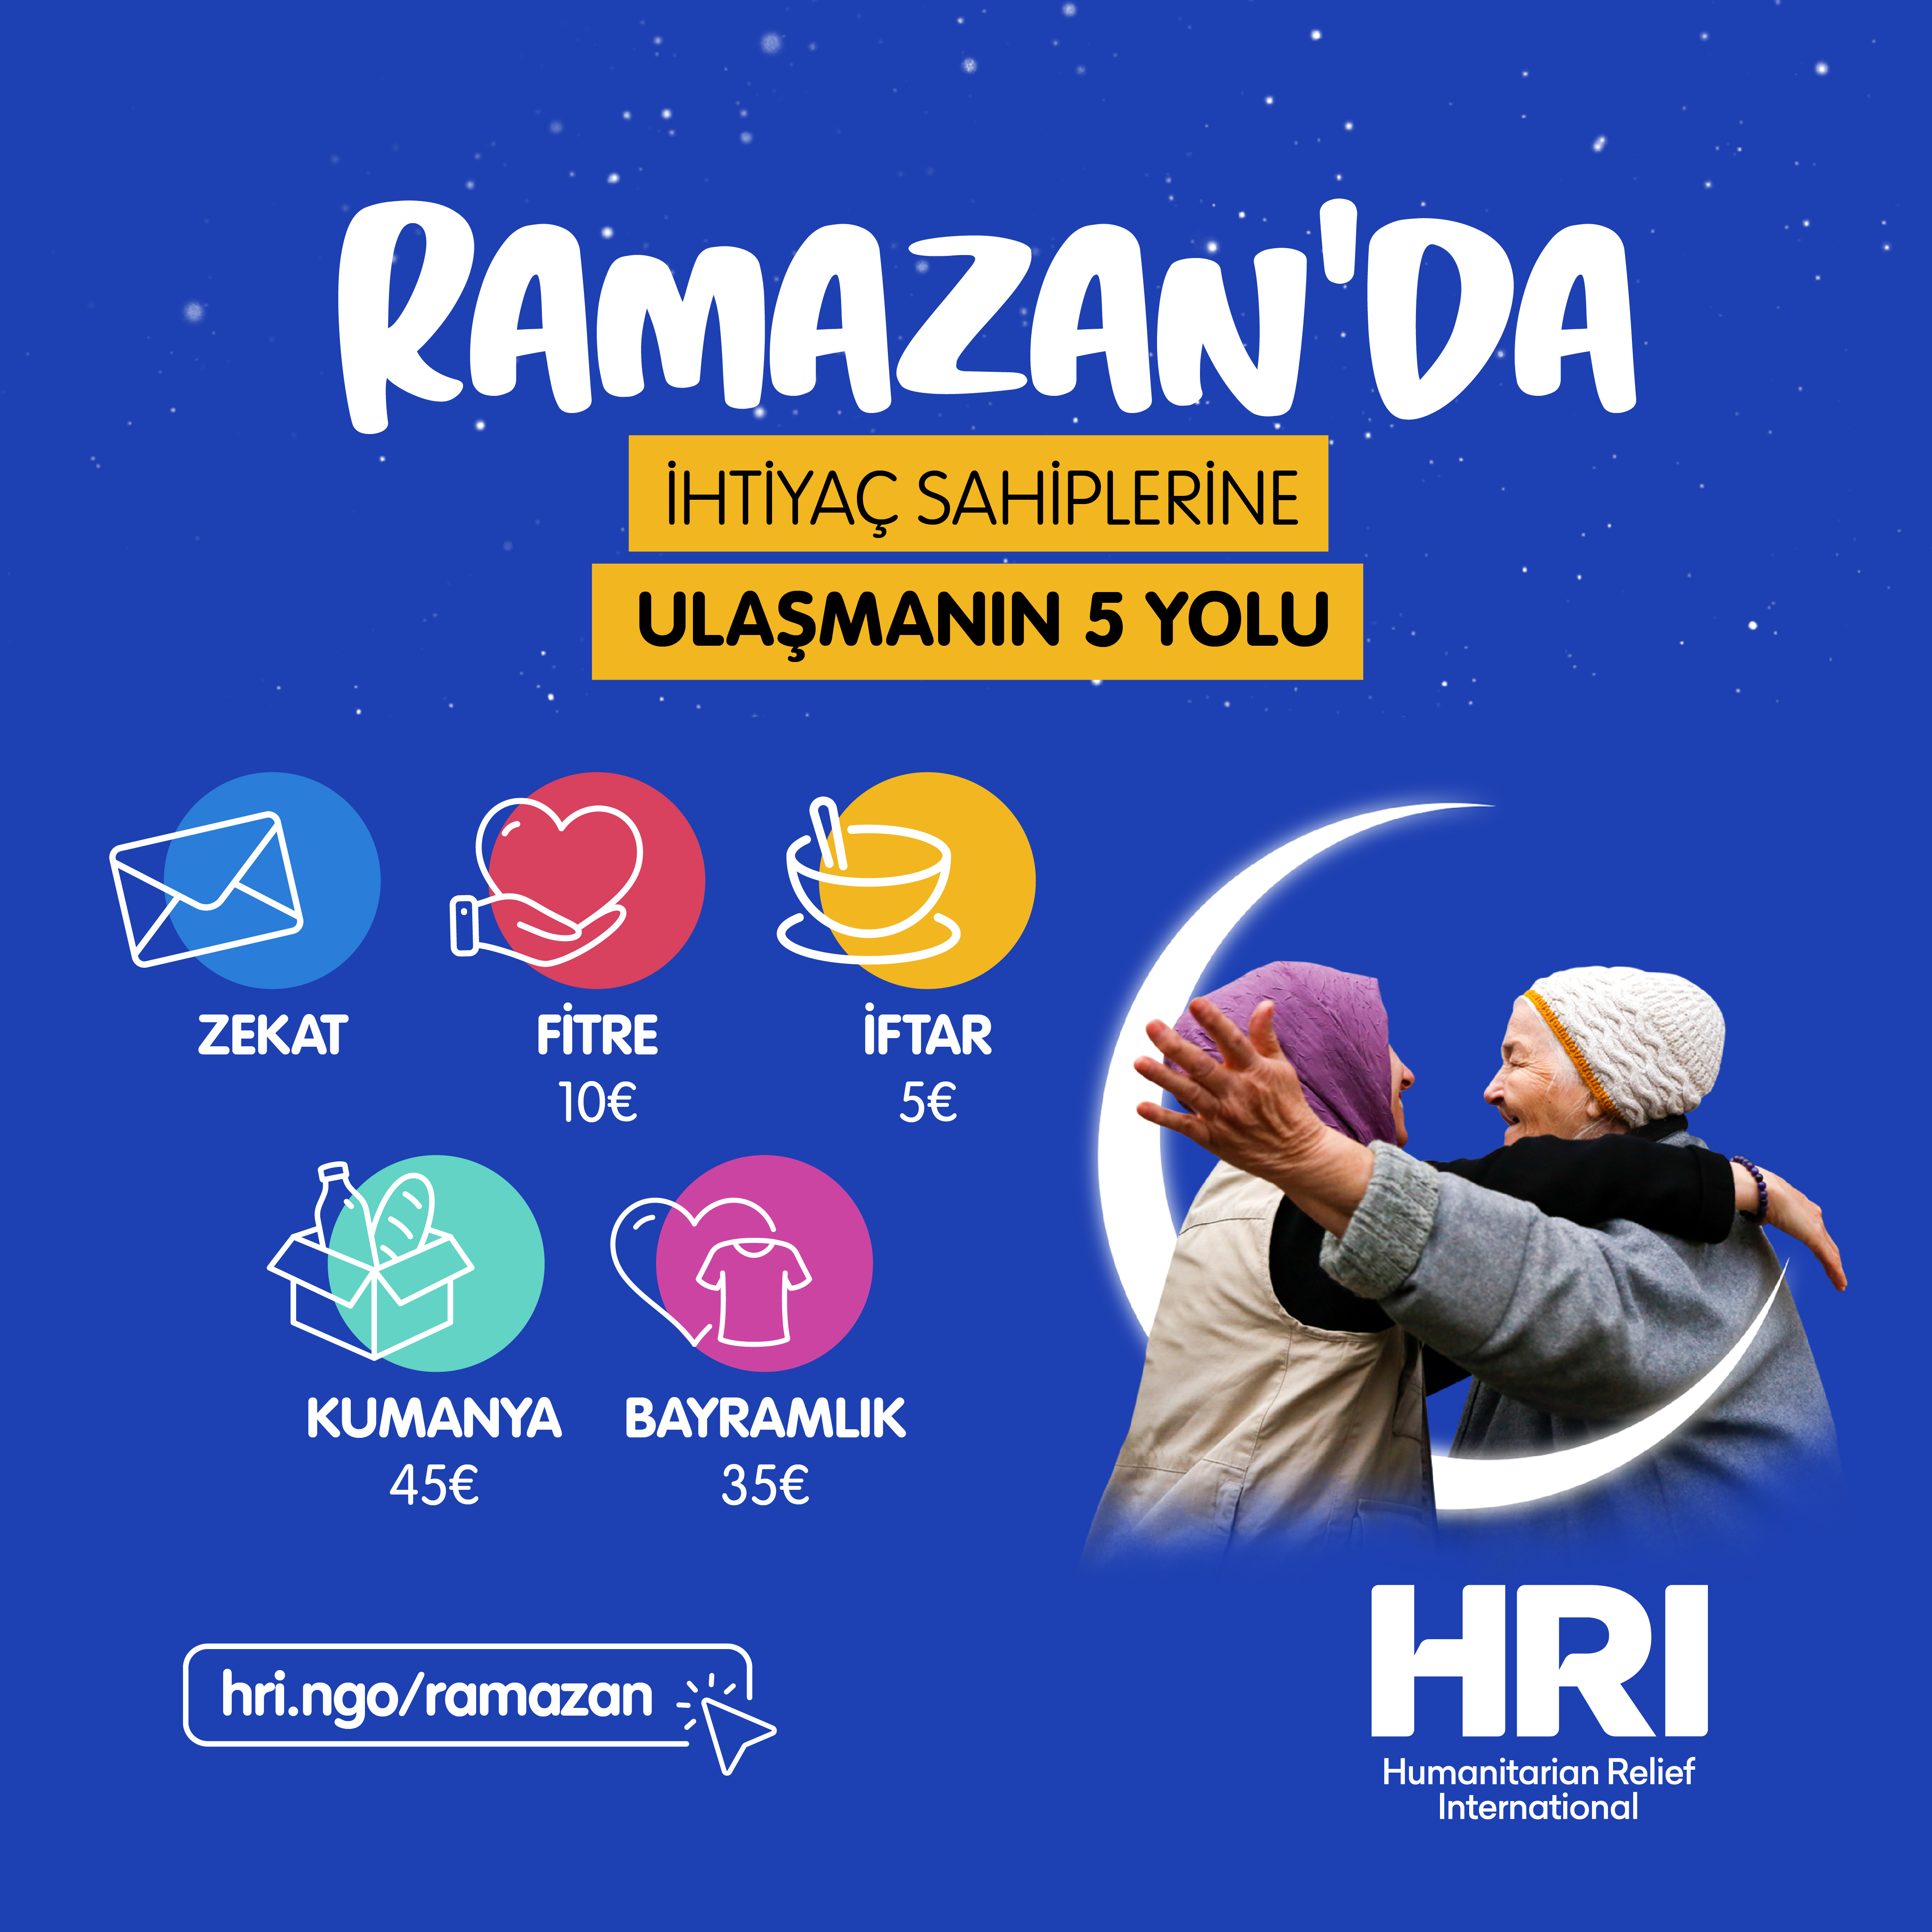 hri-ramazan-1080x1080-01.jpg